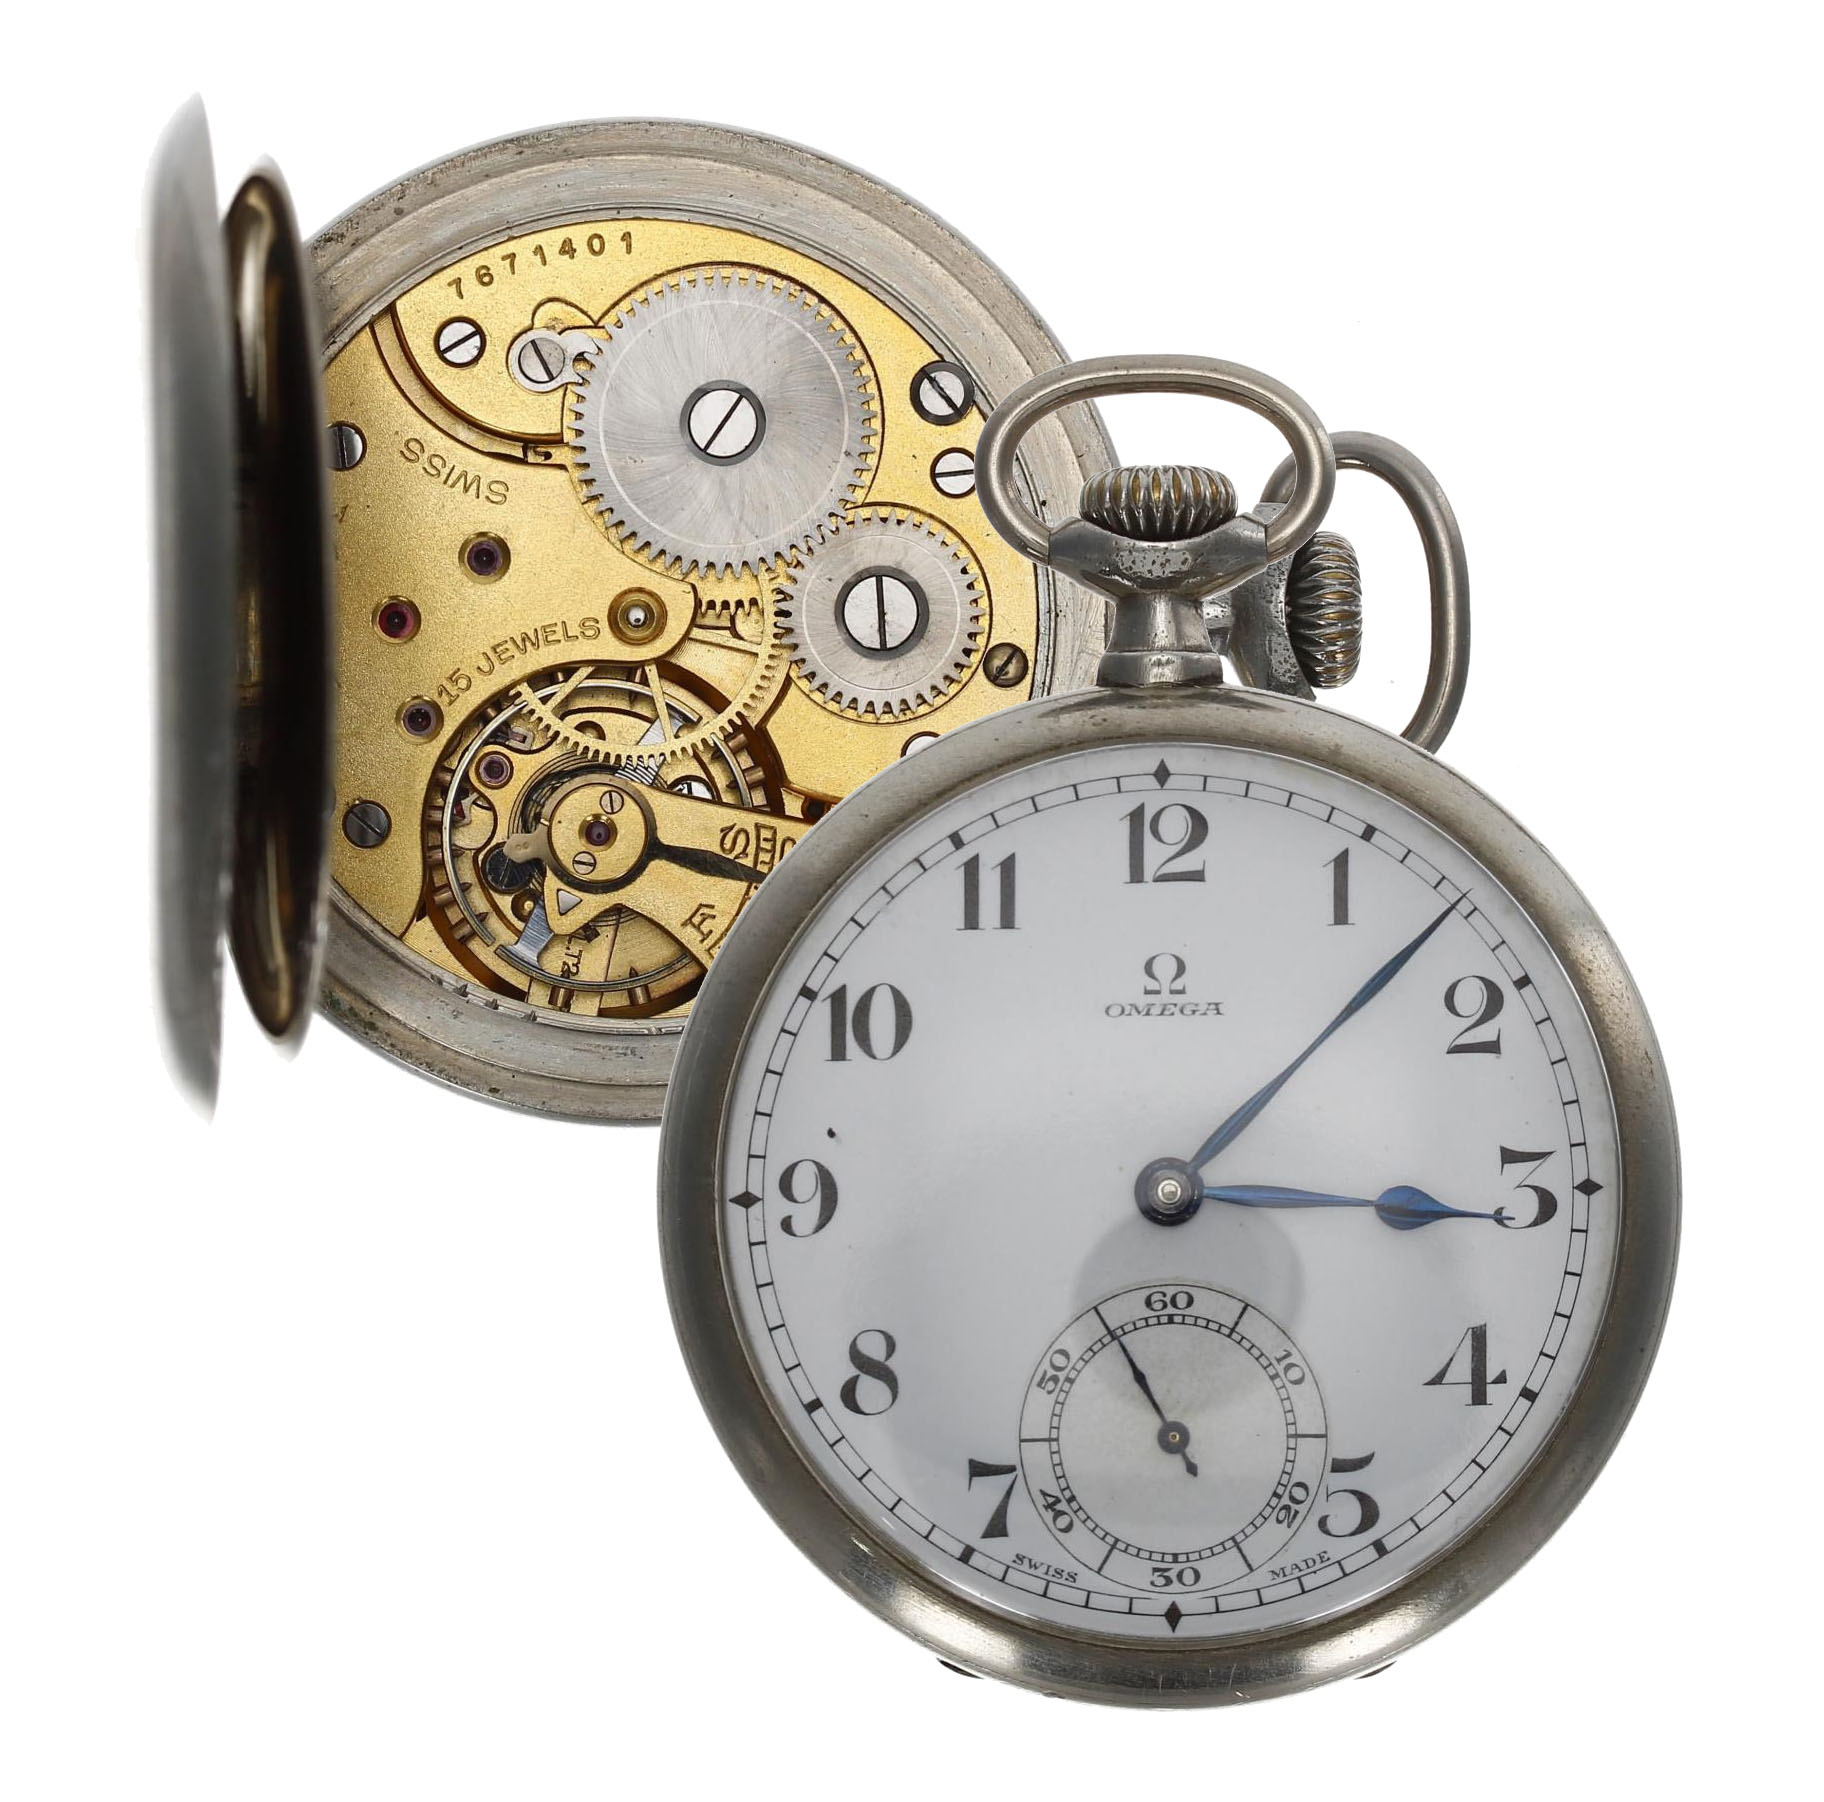 Omega - nickel cased lever pocket watch, case no. 6905179, serial no. 7671xxx, circa 1930's,